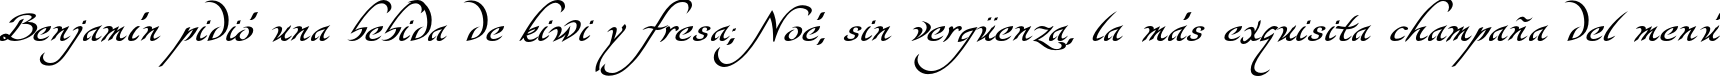 Пример написания шрифтом Yevida-Potens текста на испанском